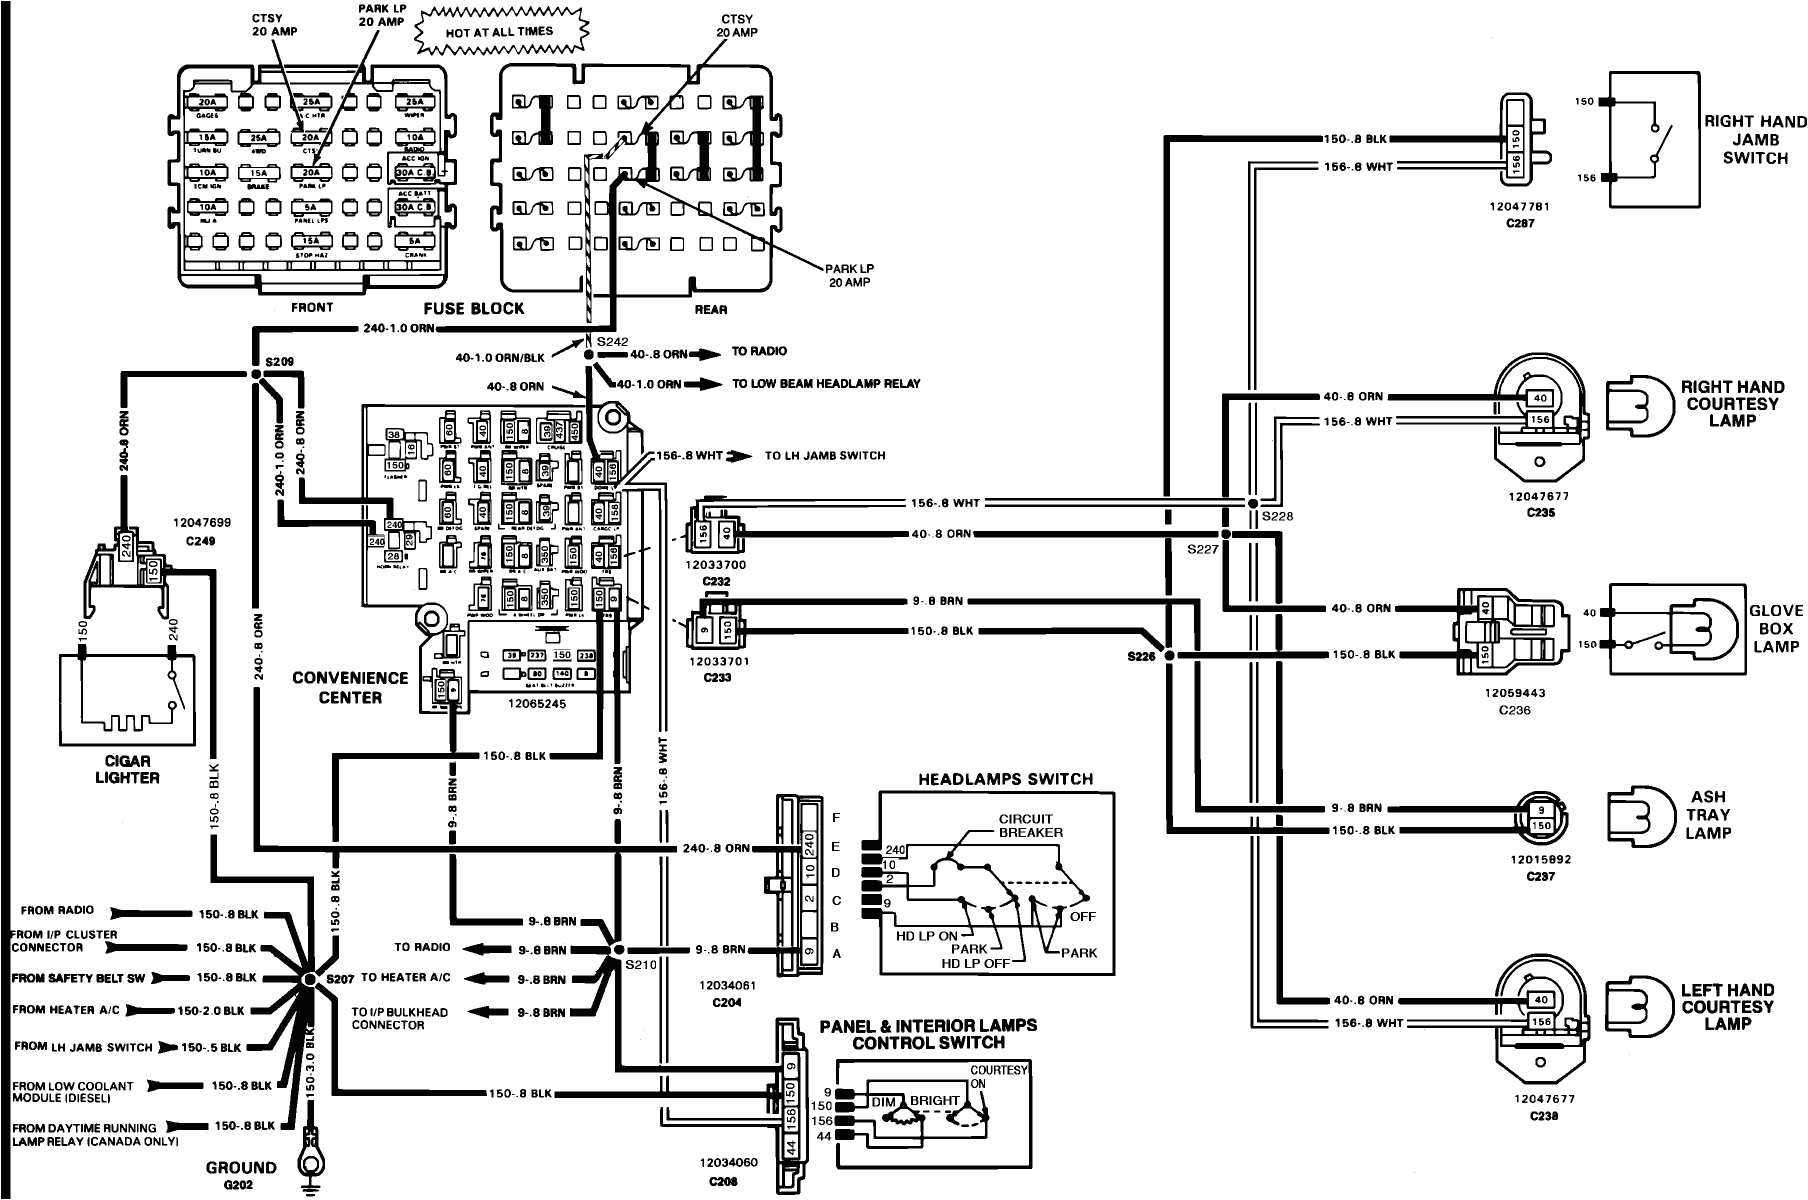 1986 chevy c10 wiring diagram luxury 86 chevy truck wiring diagram 1986 chevy silverado wiring diagram